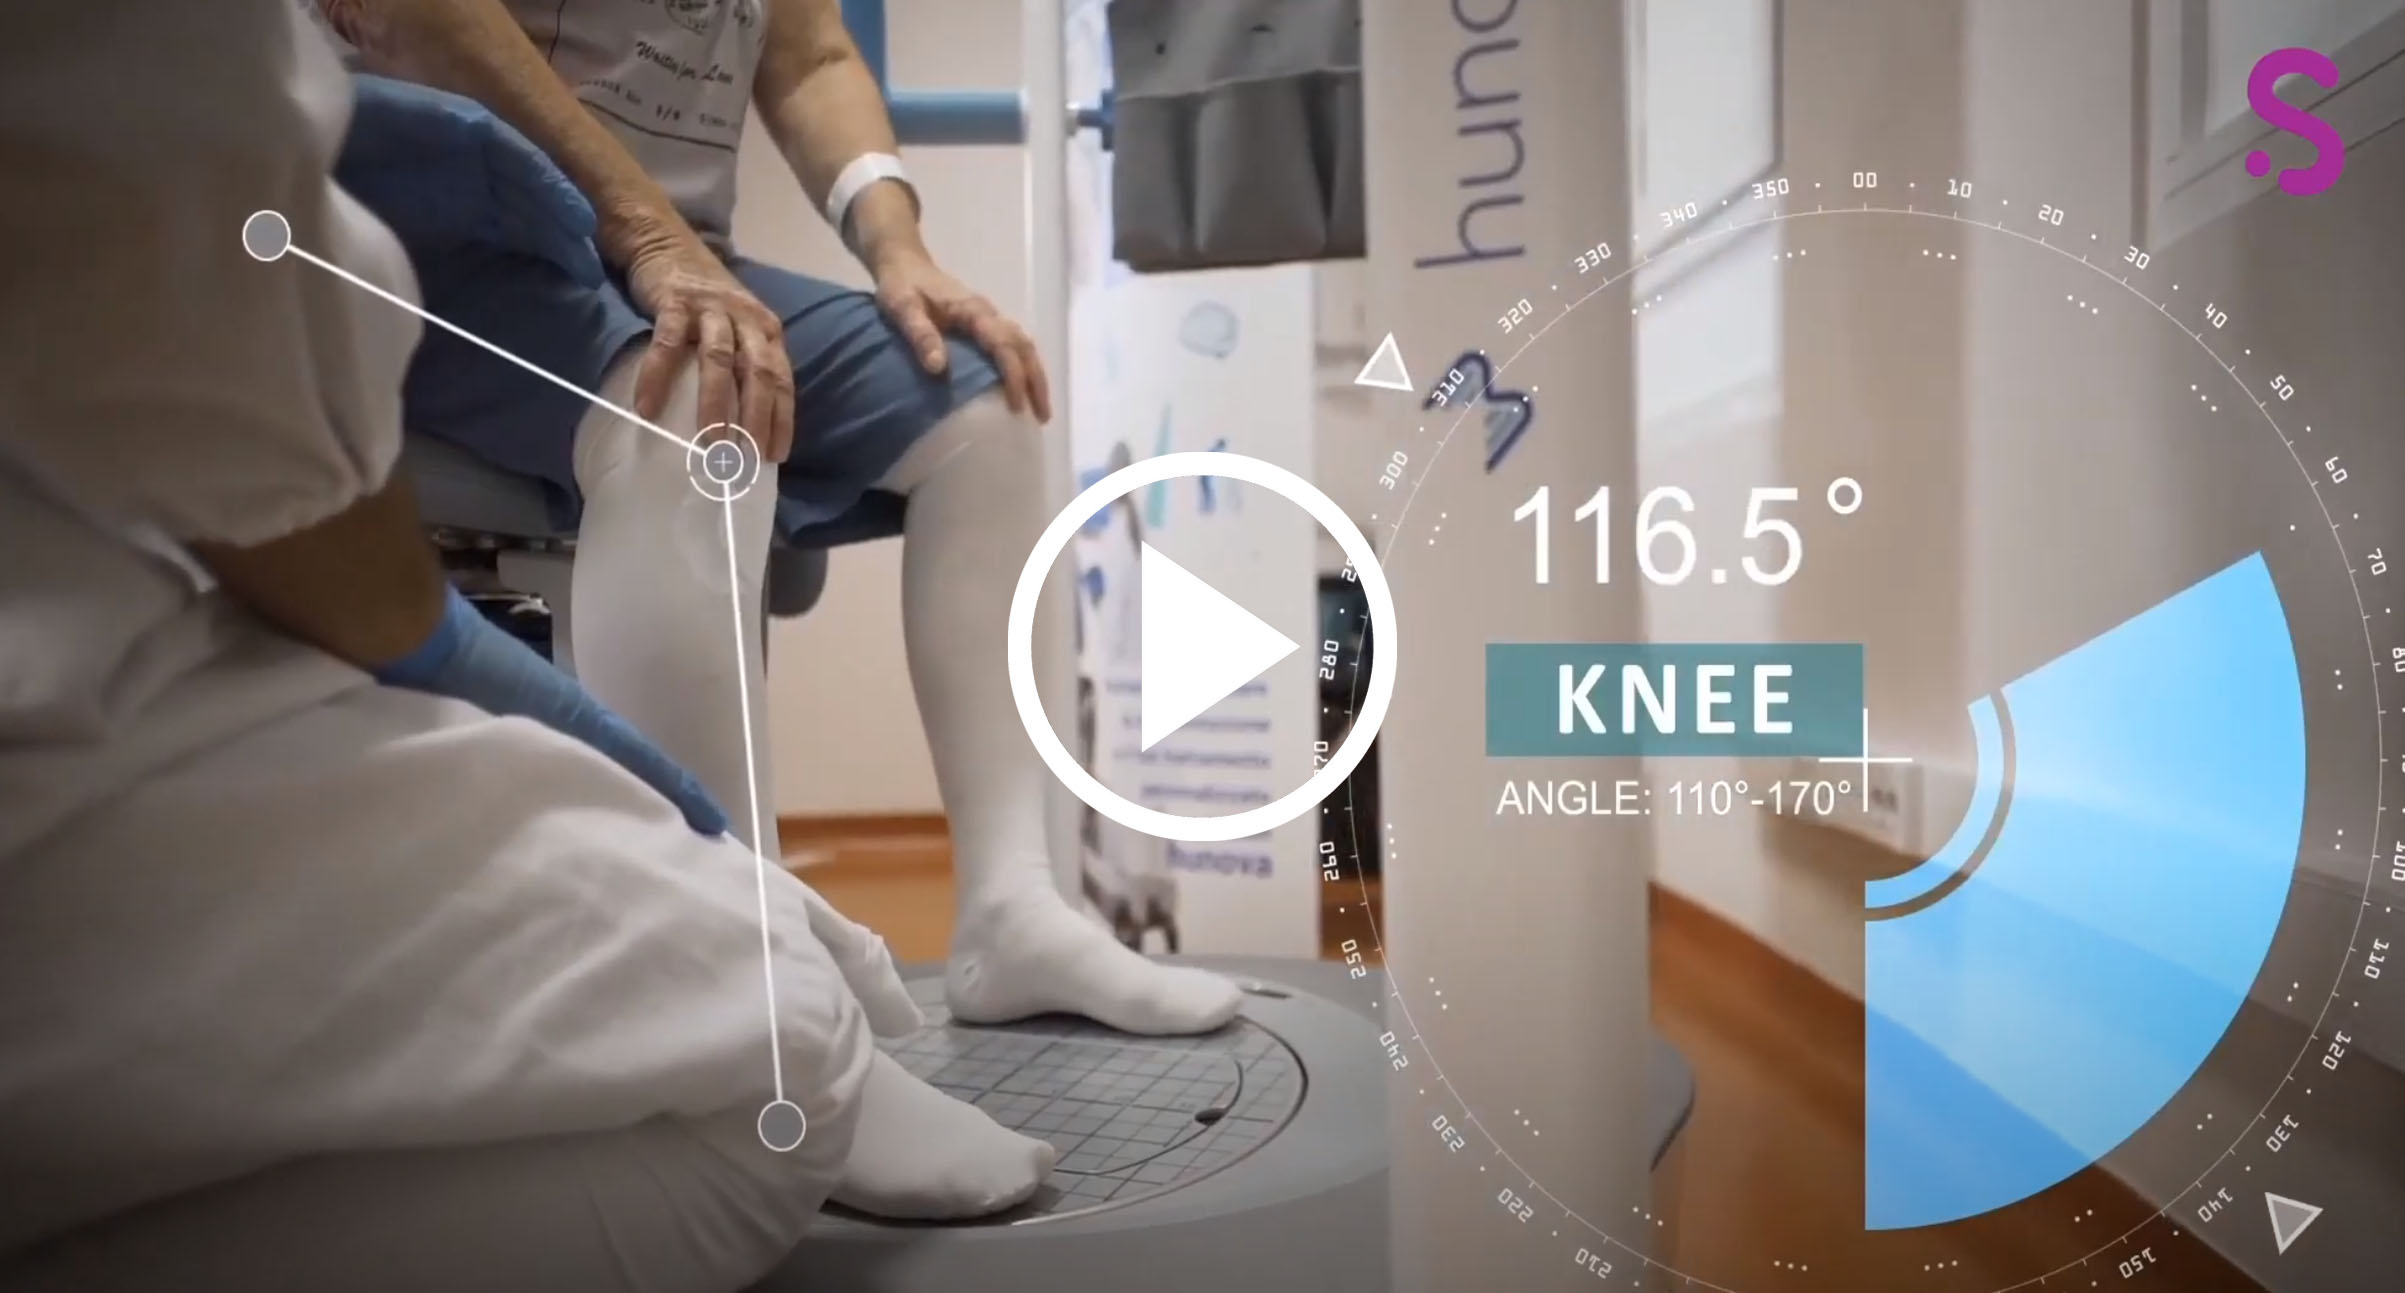 Knee-index-operacje-kolana-ortopedia-movendo-hunova-skyfi